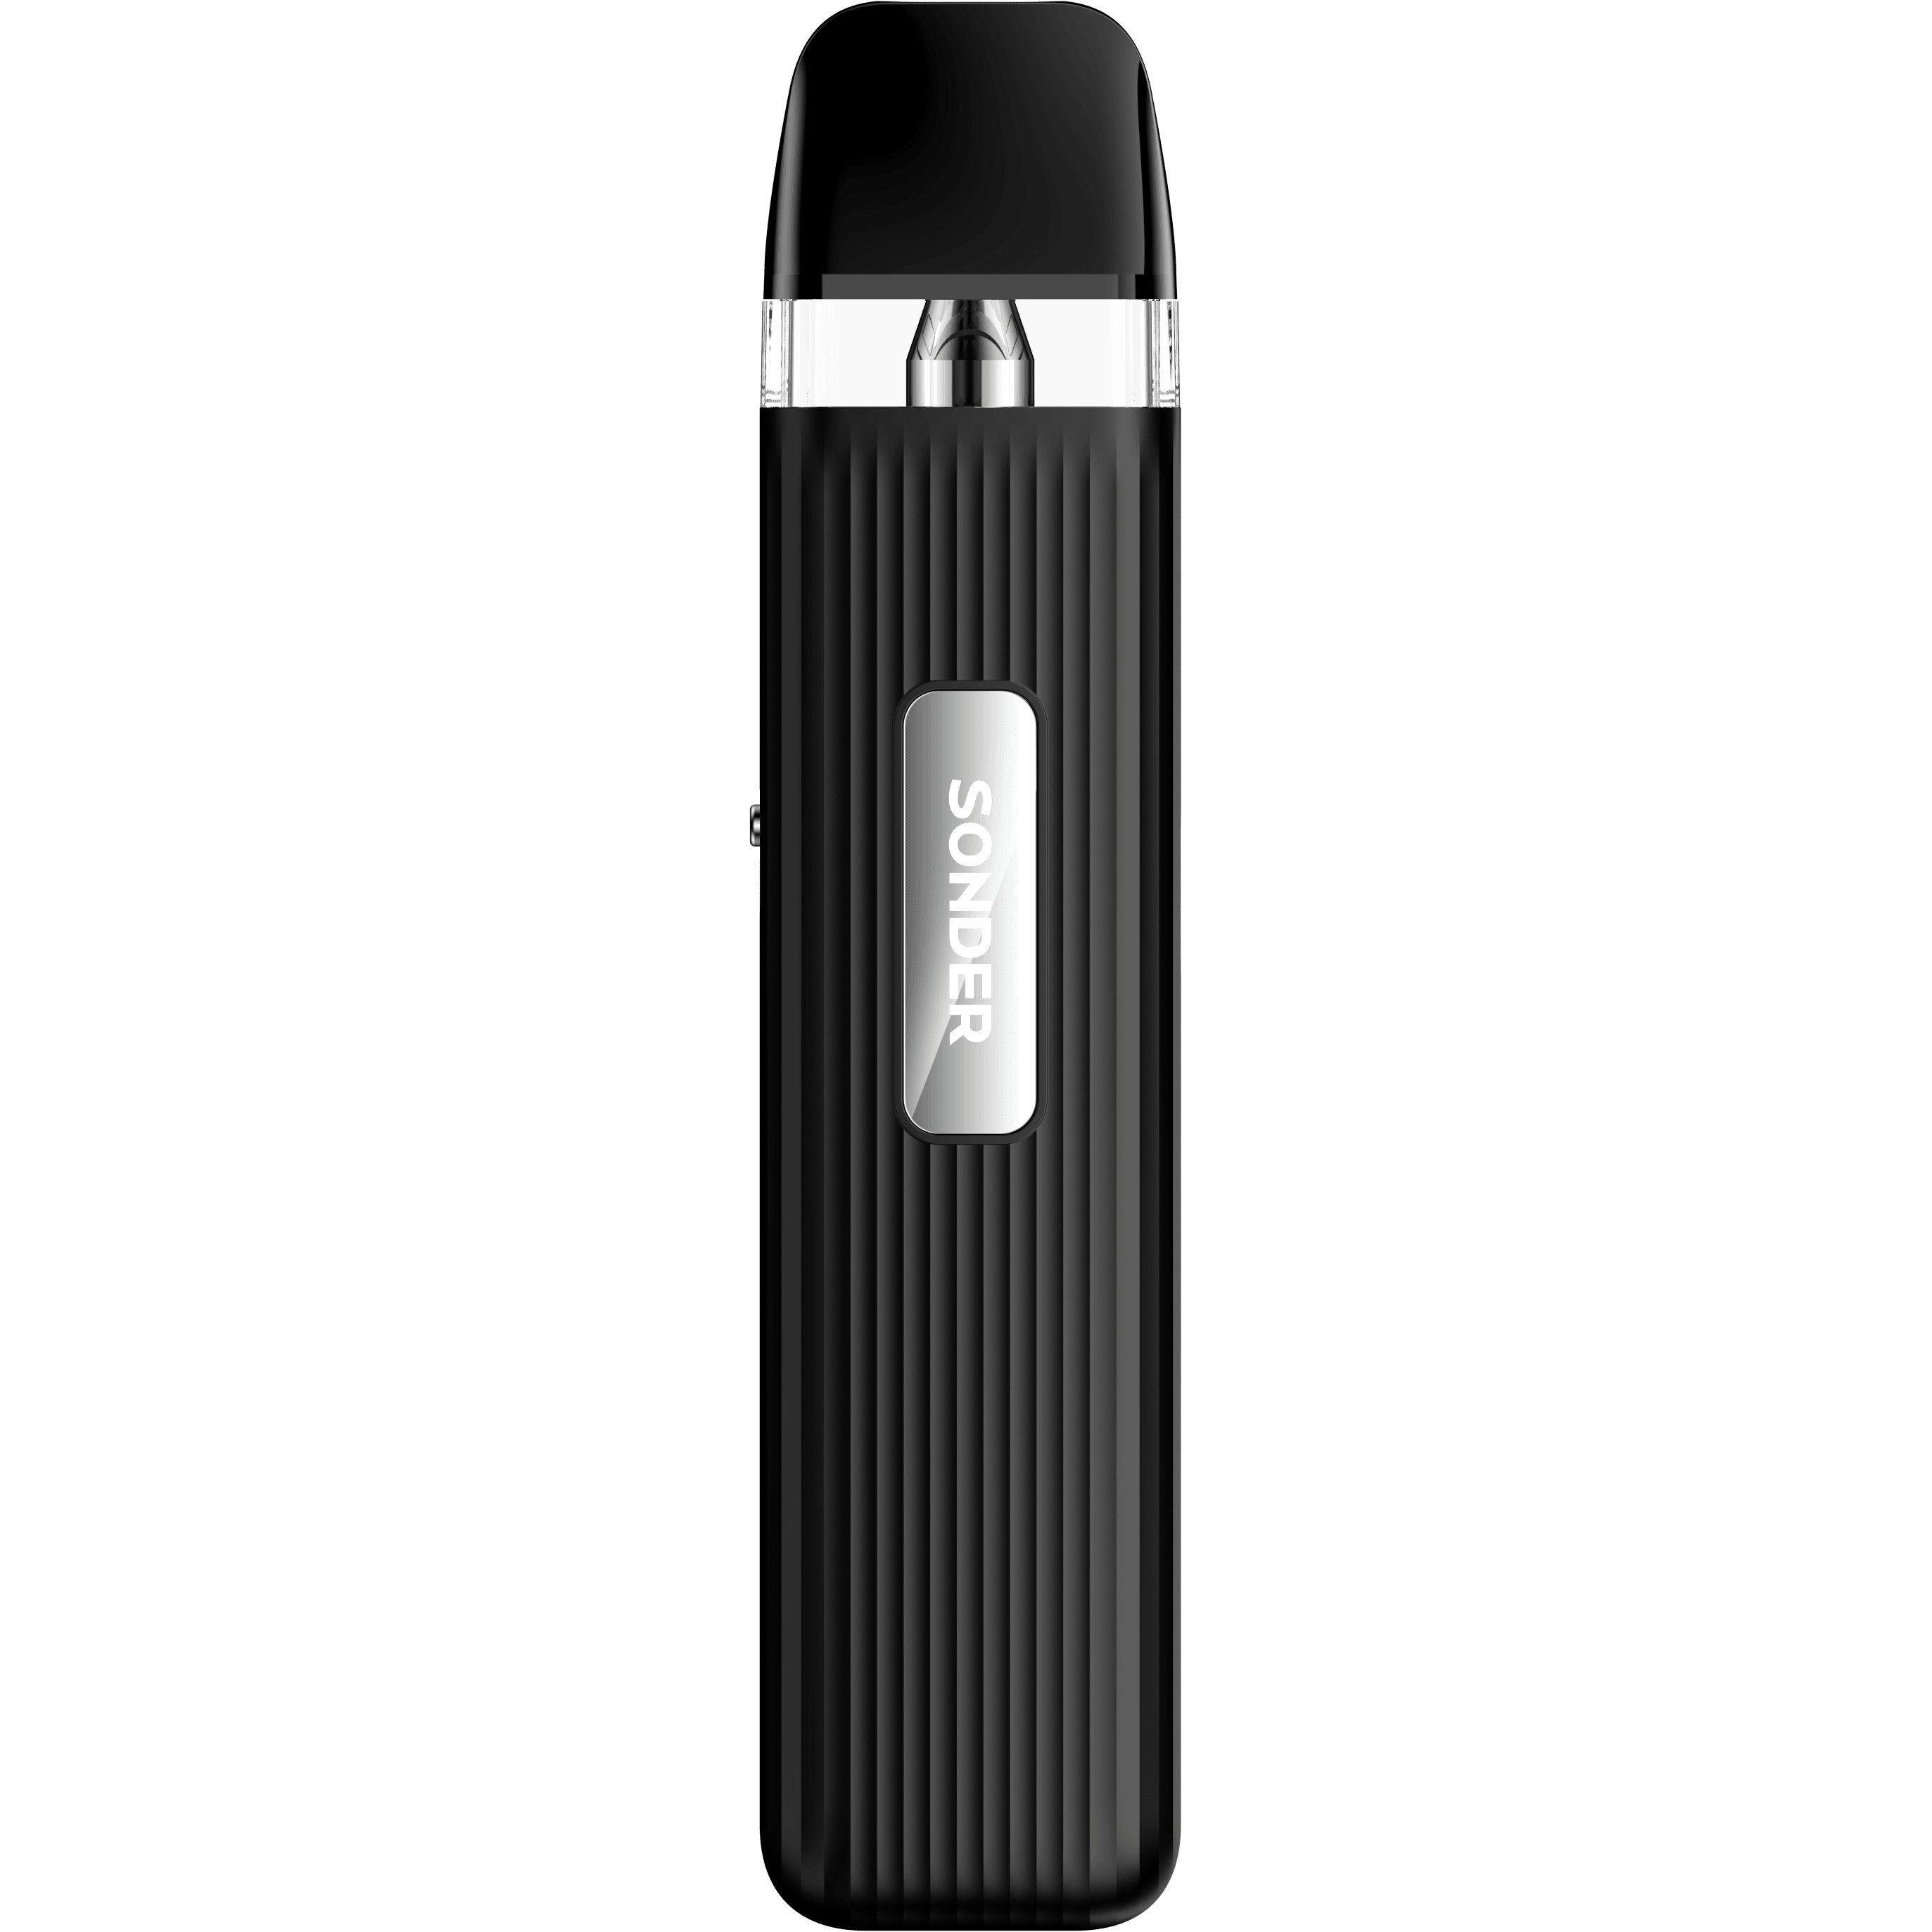 Sonder Q Kit by Geekvape - Black